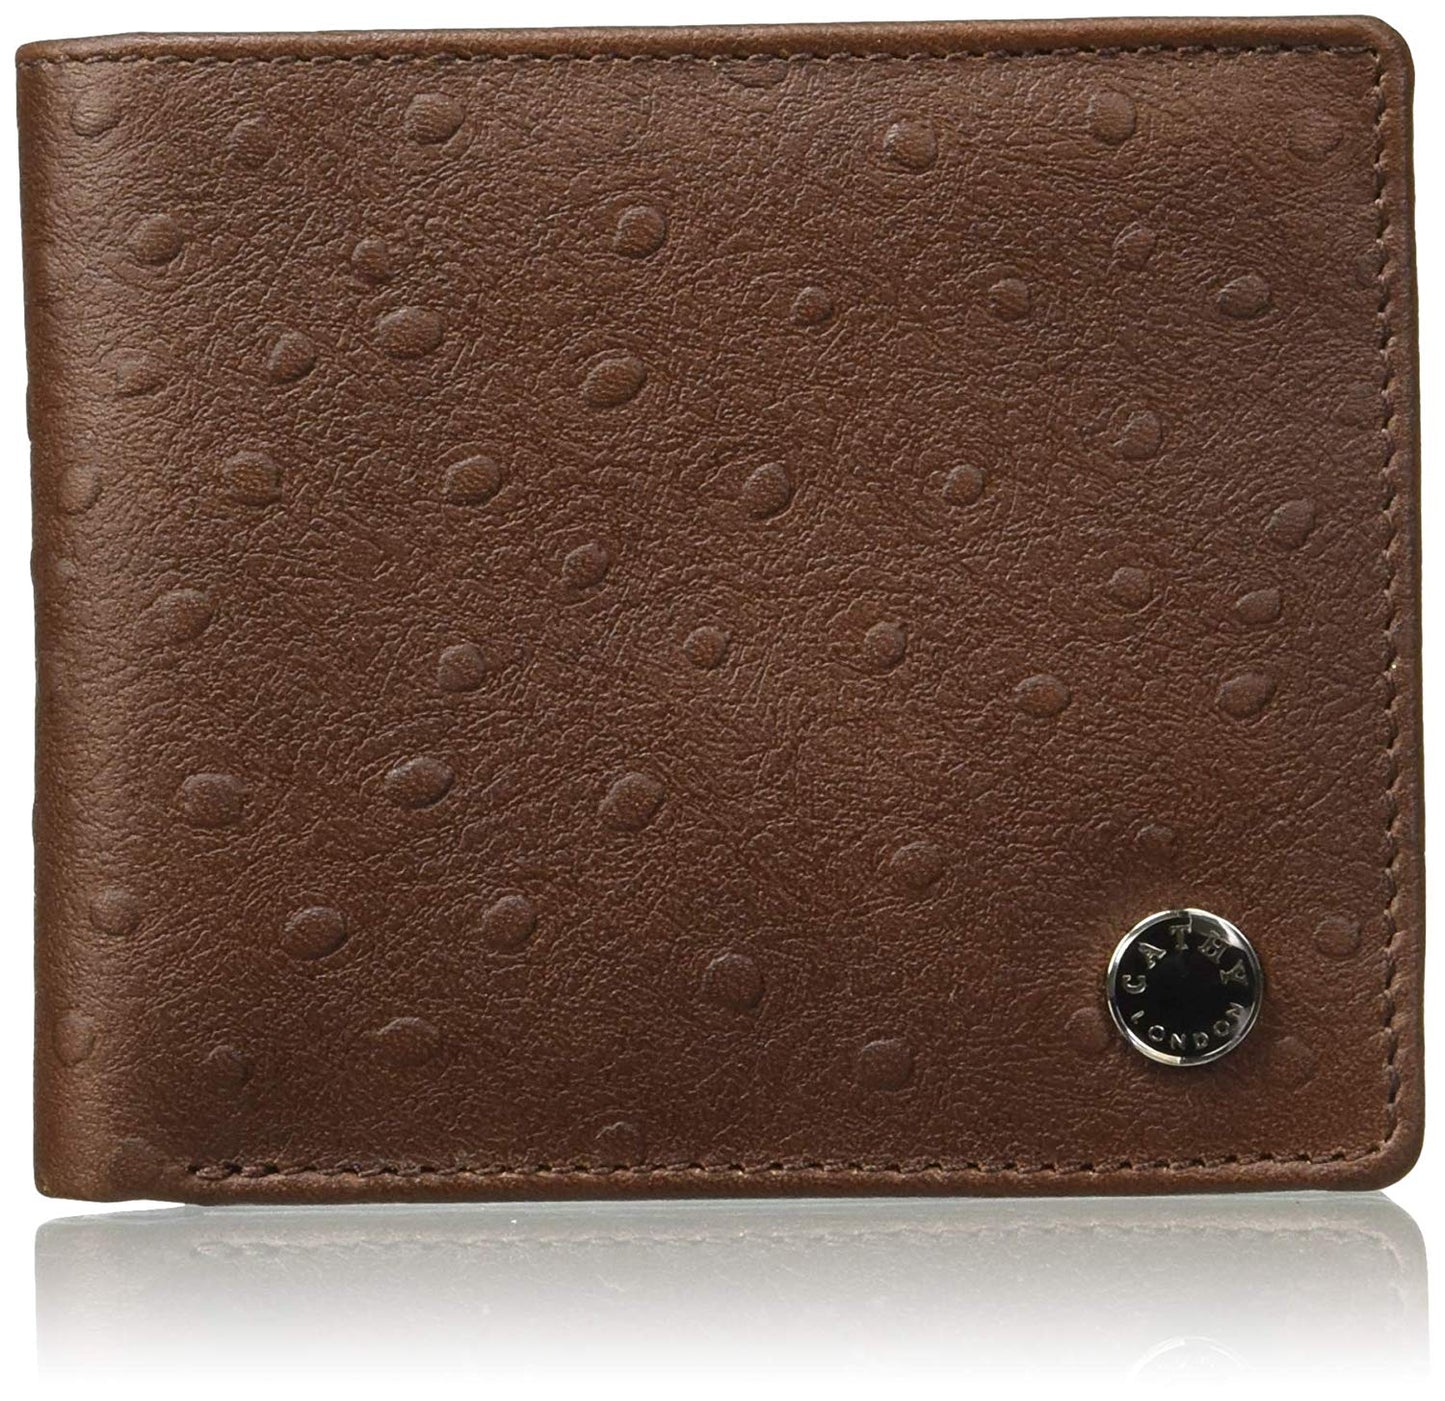 Brown Colour Bi-Fold Italian Leather Slim Wallet ( 6 Card Slot + 2 Hidden Compartment + Cash Compartment )